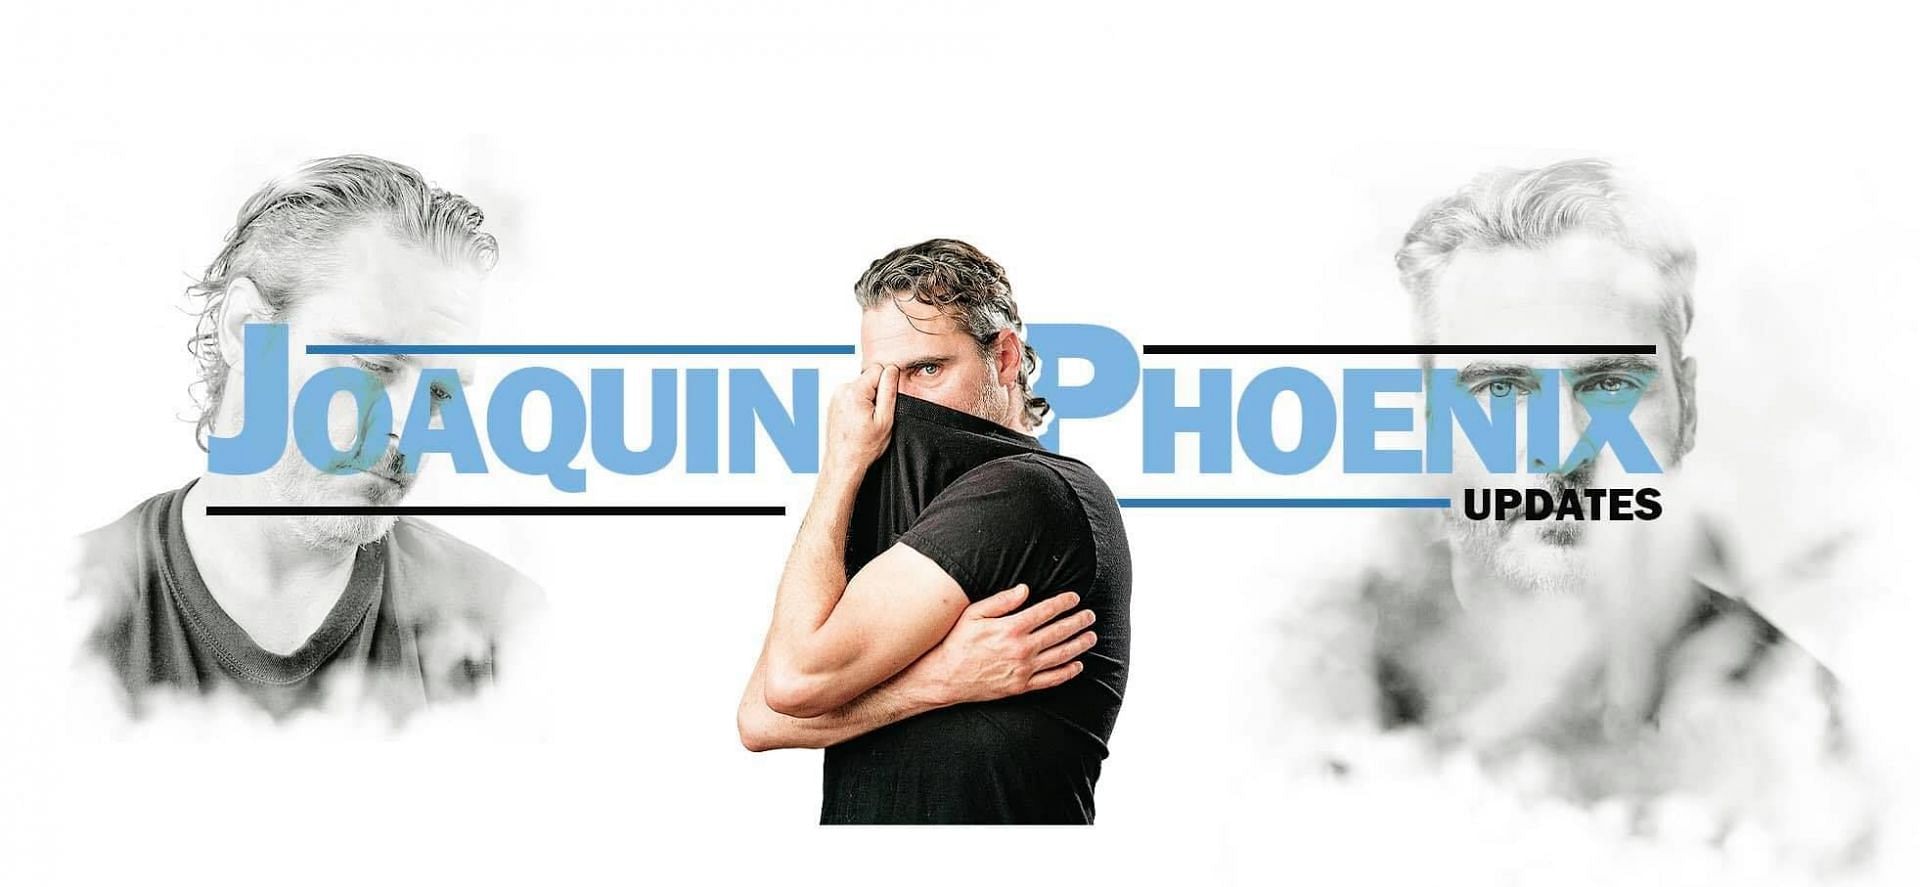 Joaquin Phoenix (Image via Facebook @Joaquin Phoenix Updates)